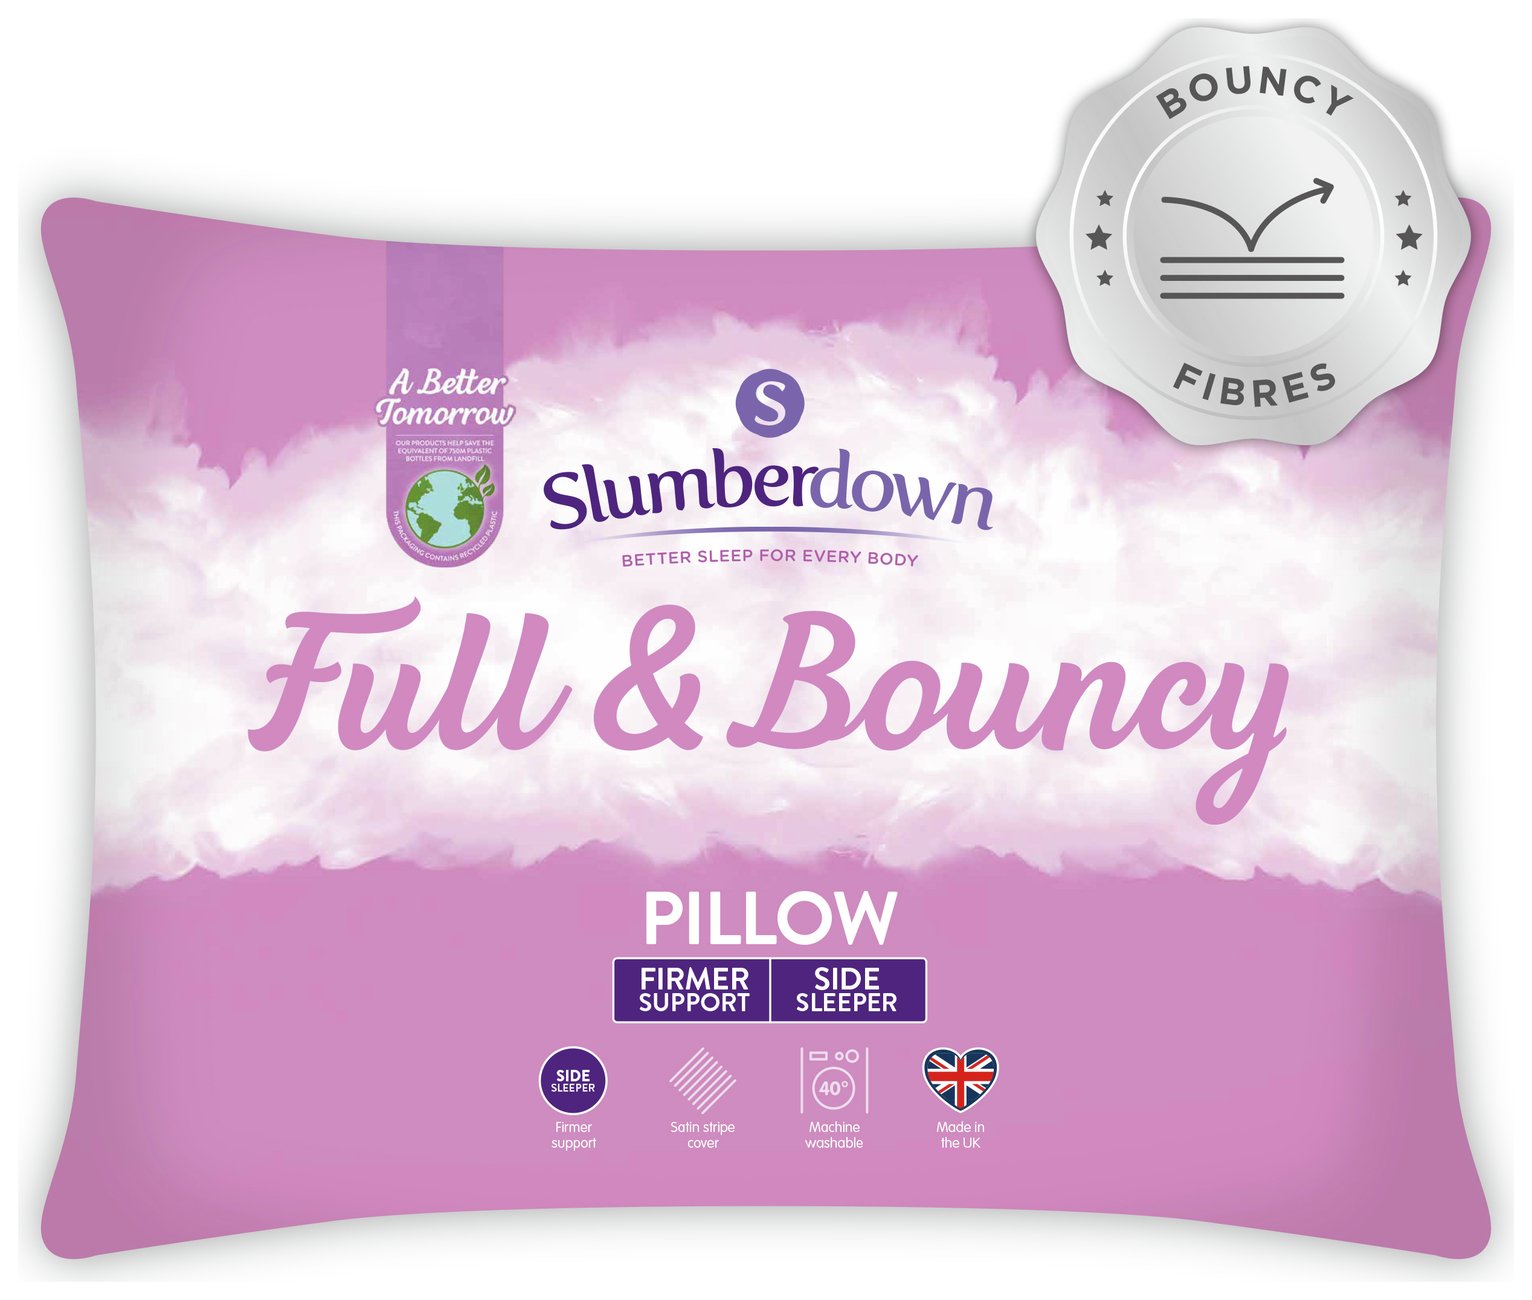 Slumberdown Full and Bouncy Firm Pillow